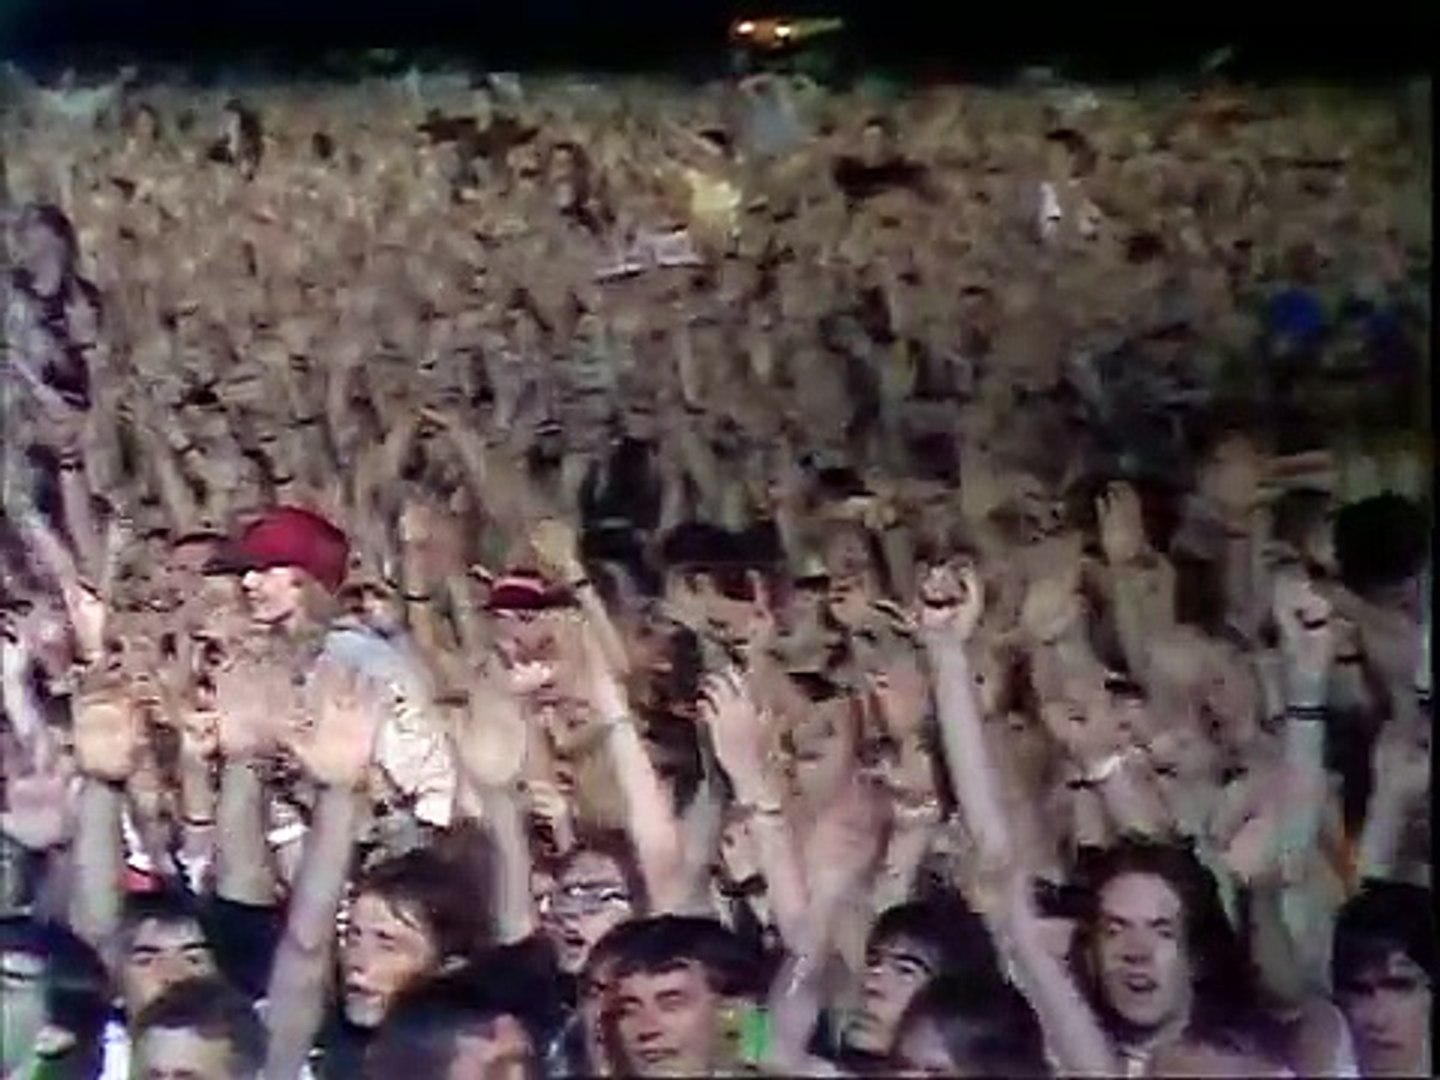 Queen - Radio Ga Ga (Live At Wembley Stadium, Friday 11 July 1986) - video  Dailymotion